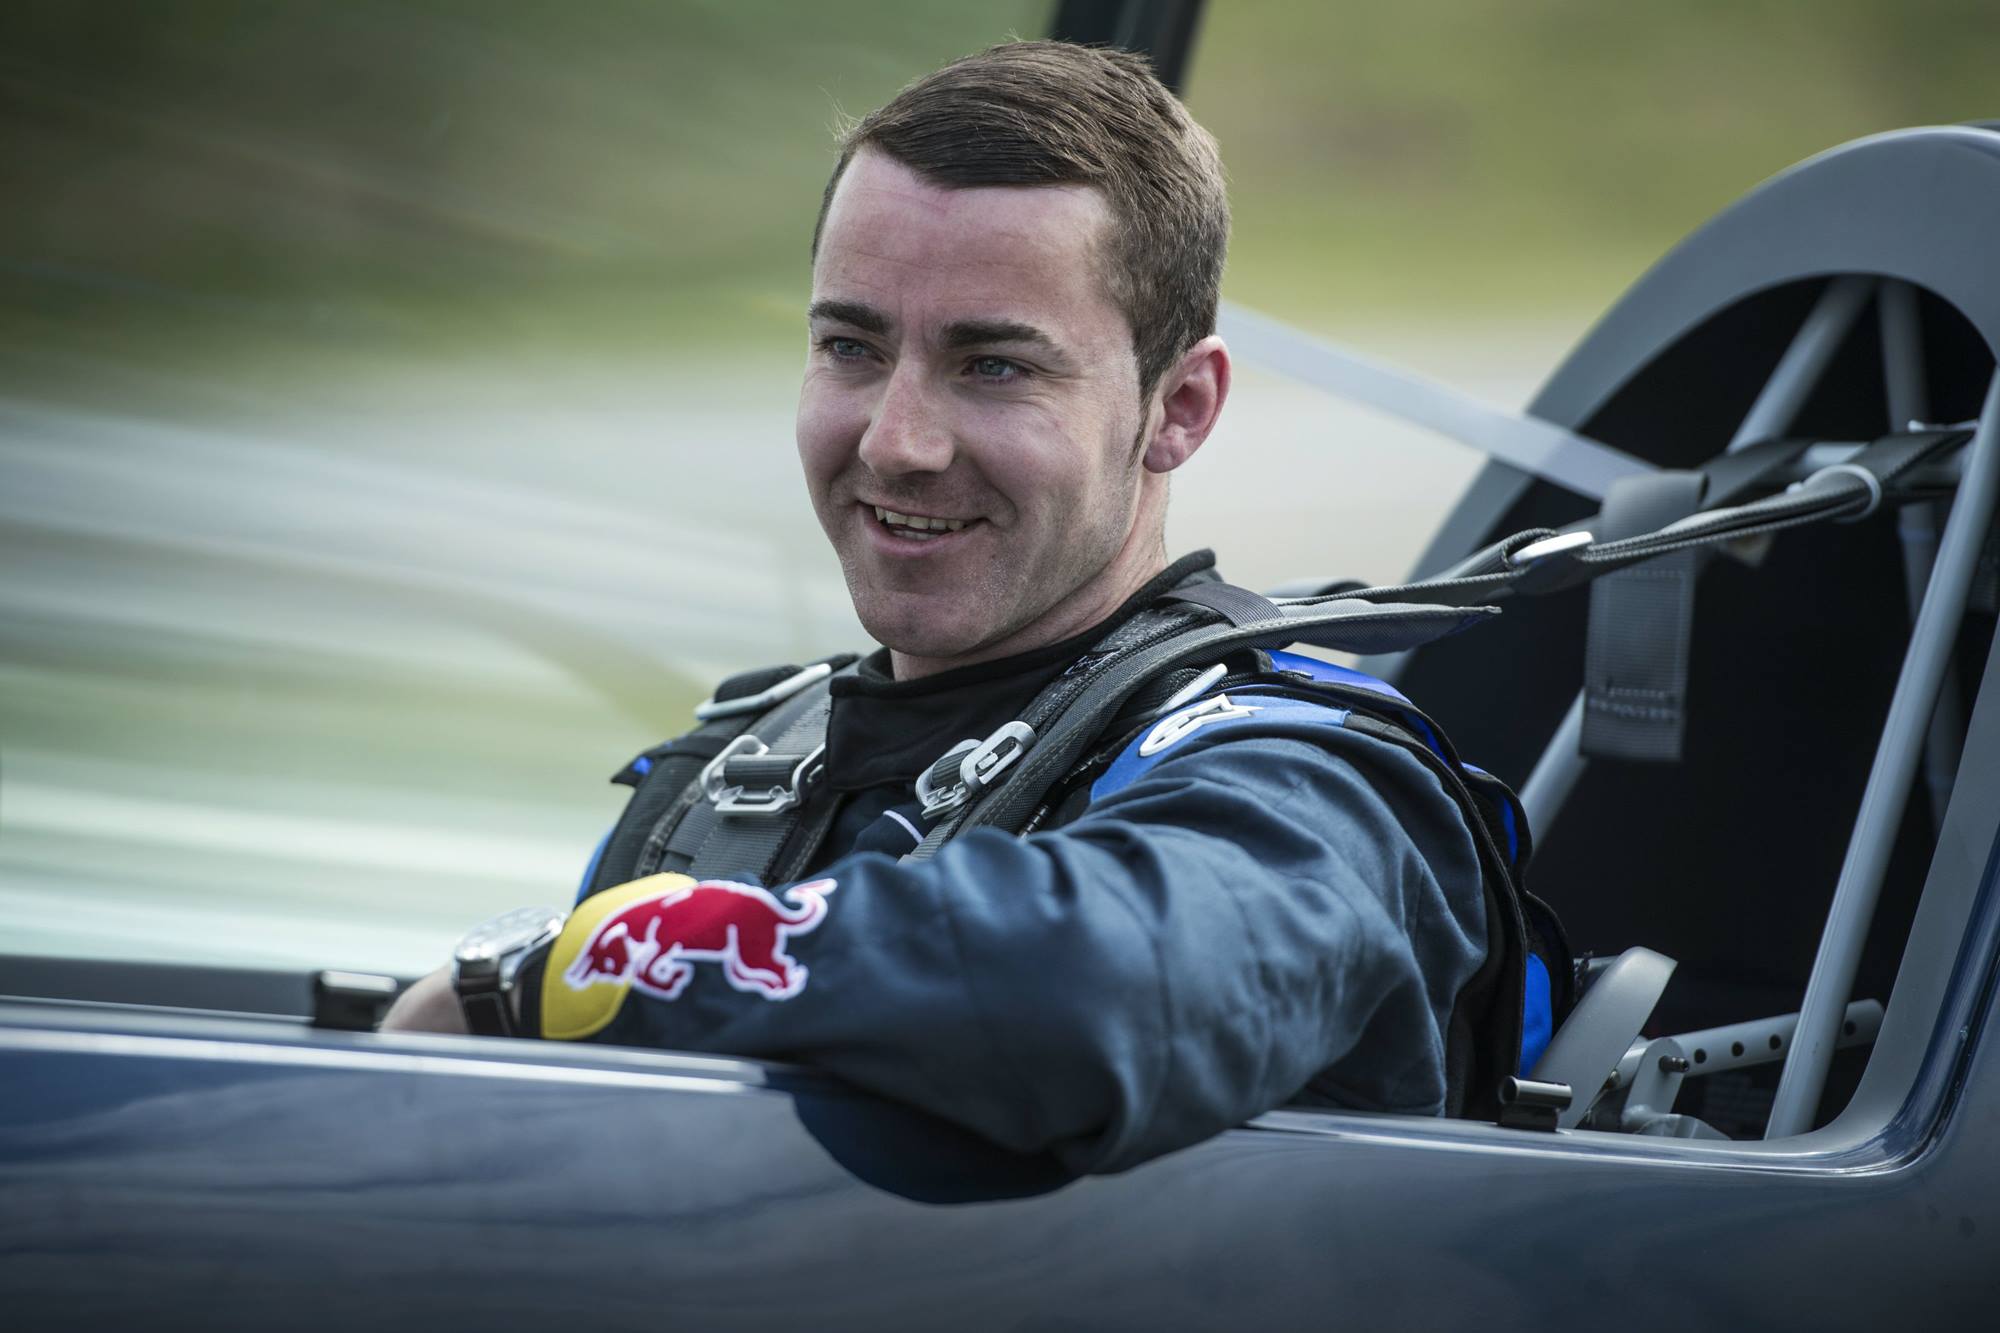 Red Bull Air Race: Arch triumfował w Gdyni